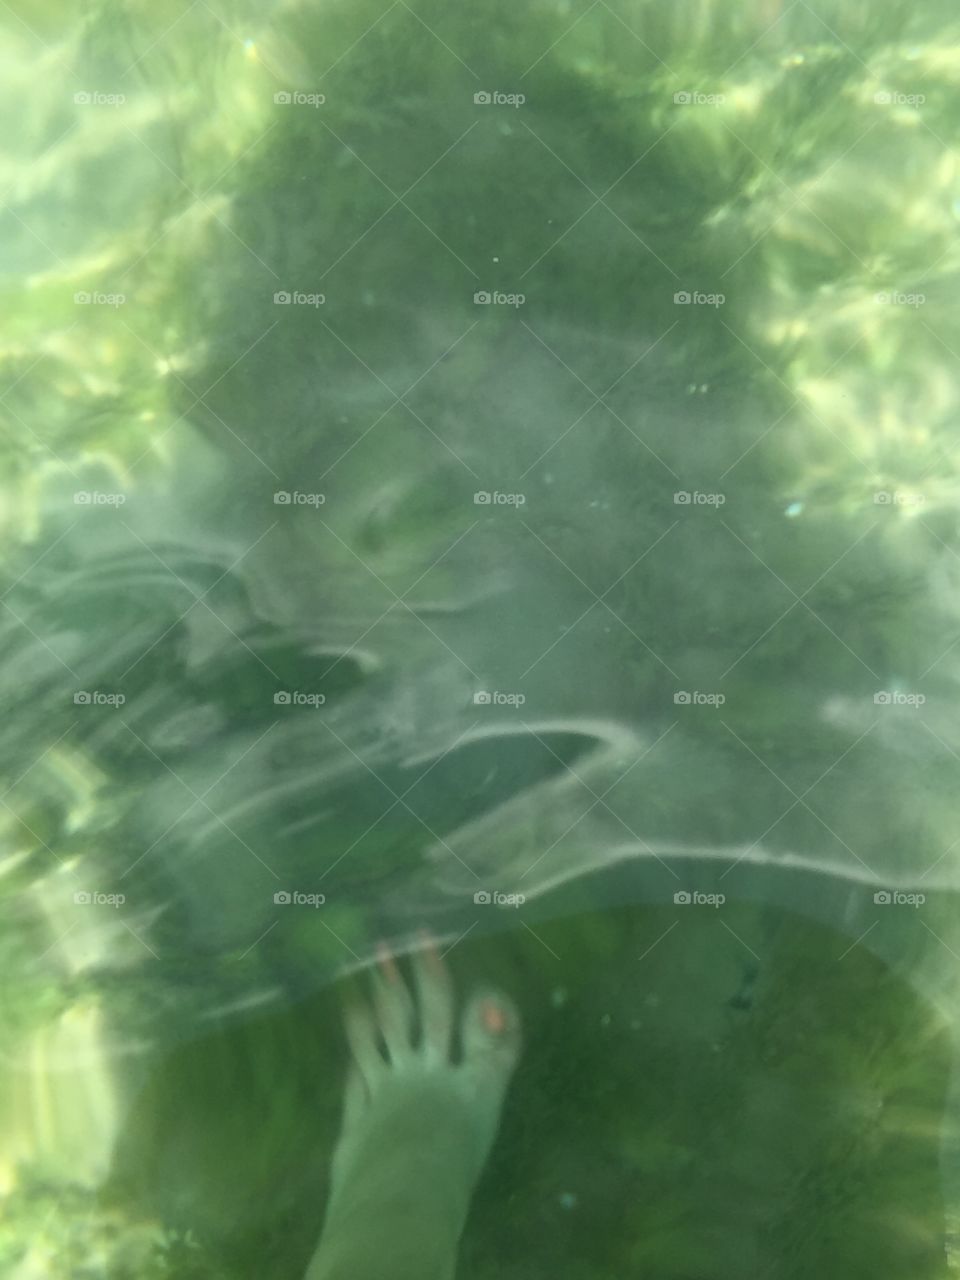 Underwater foot